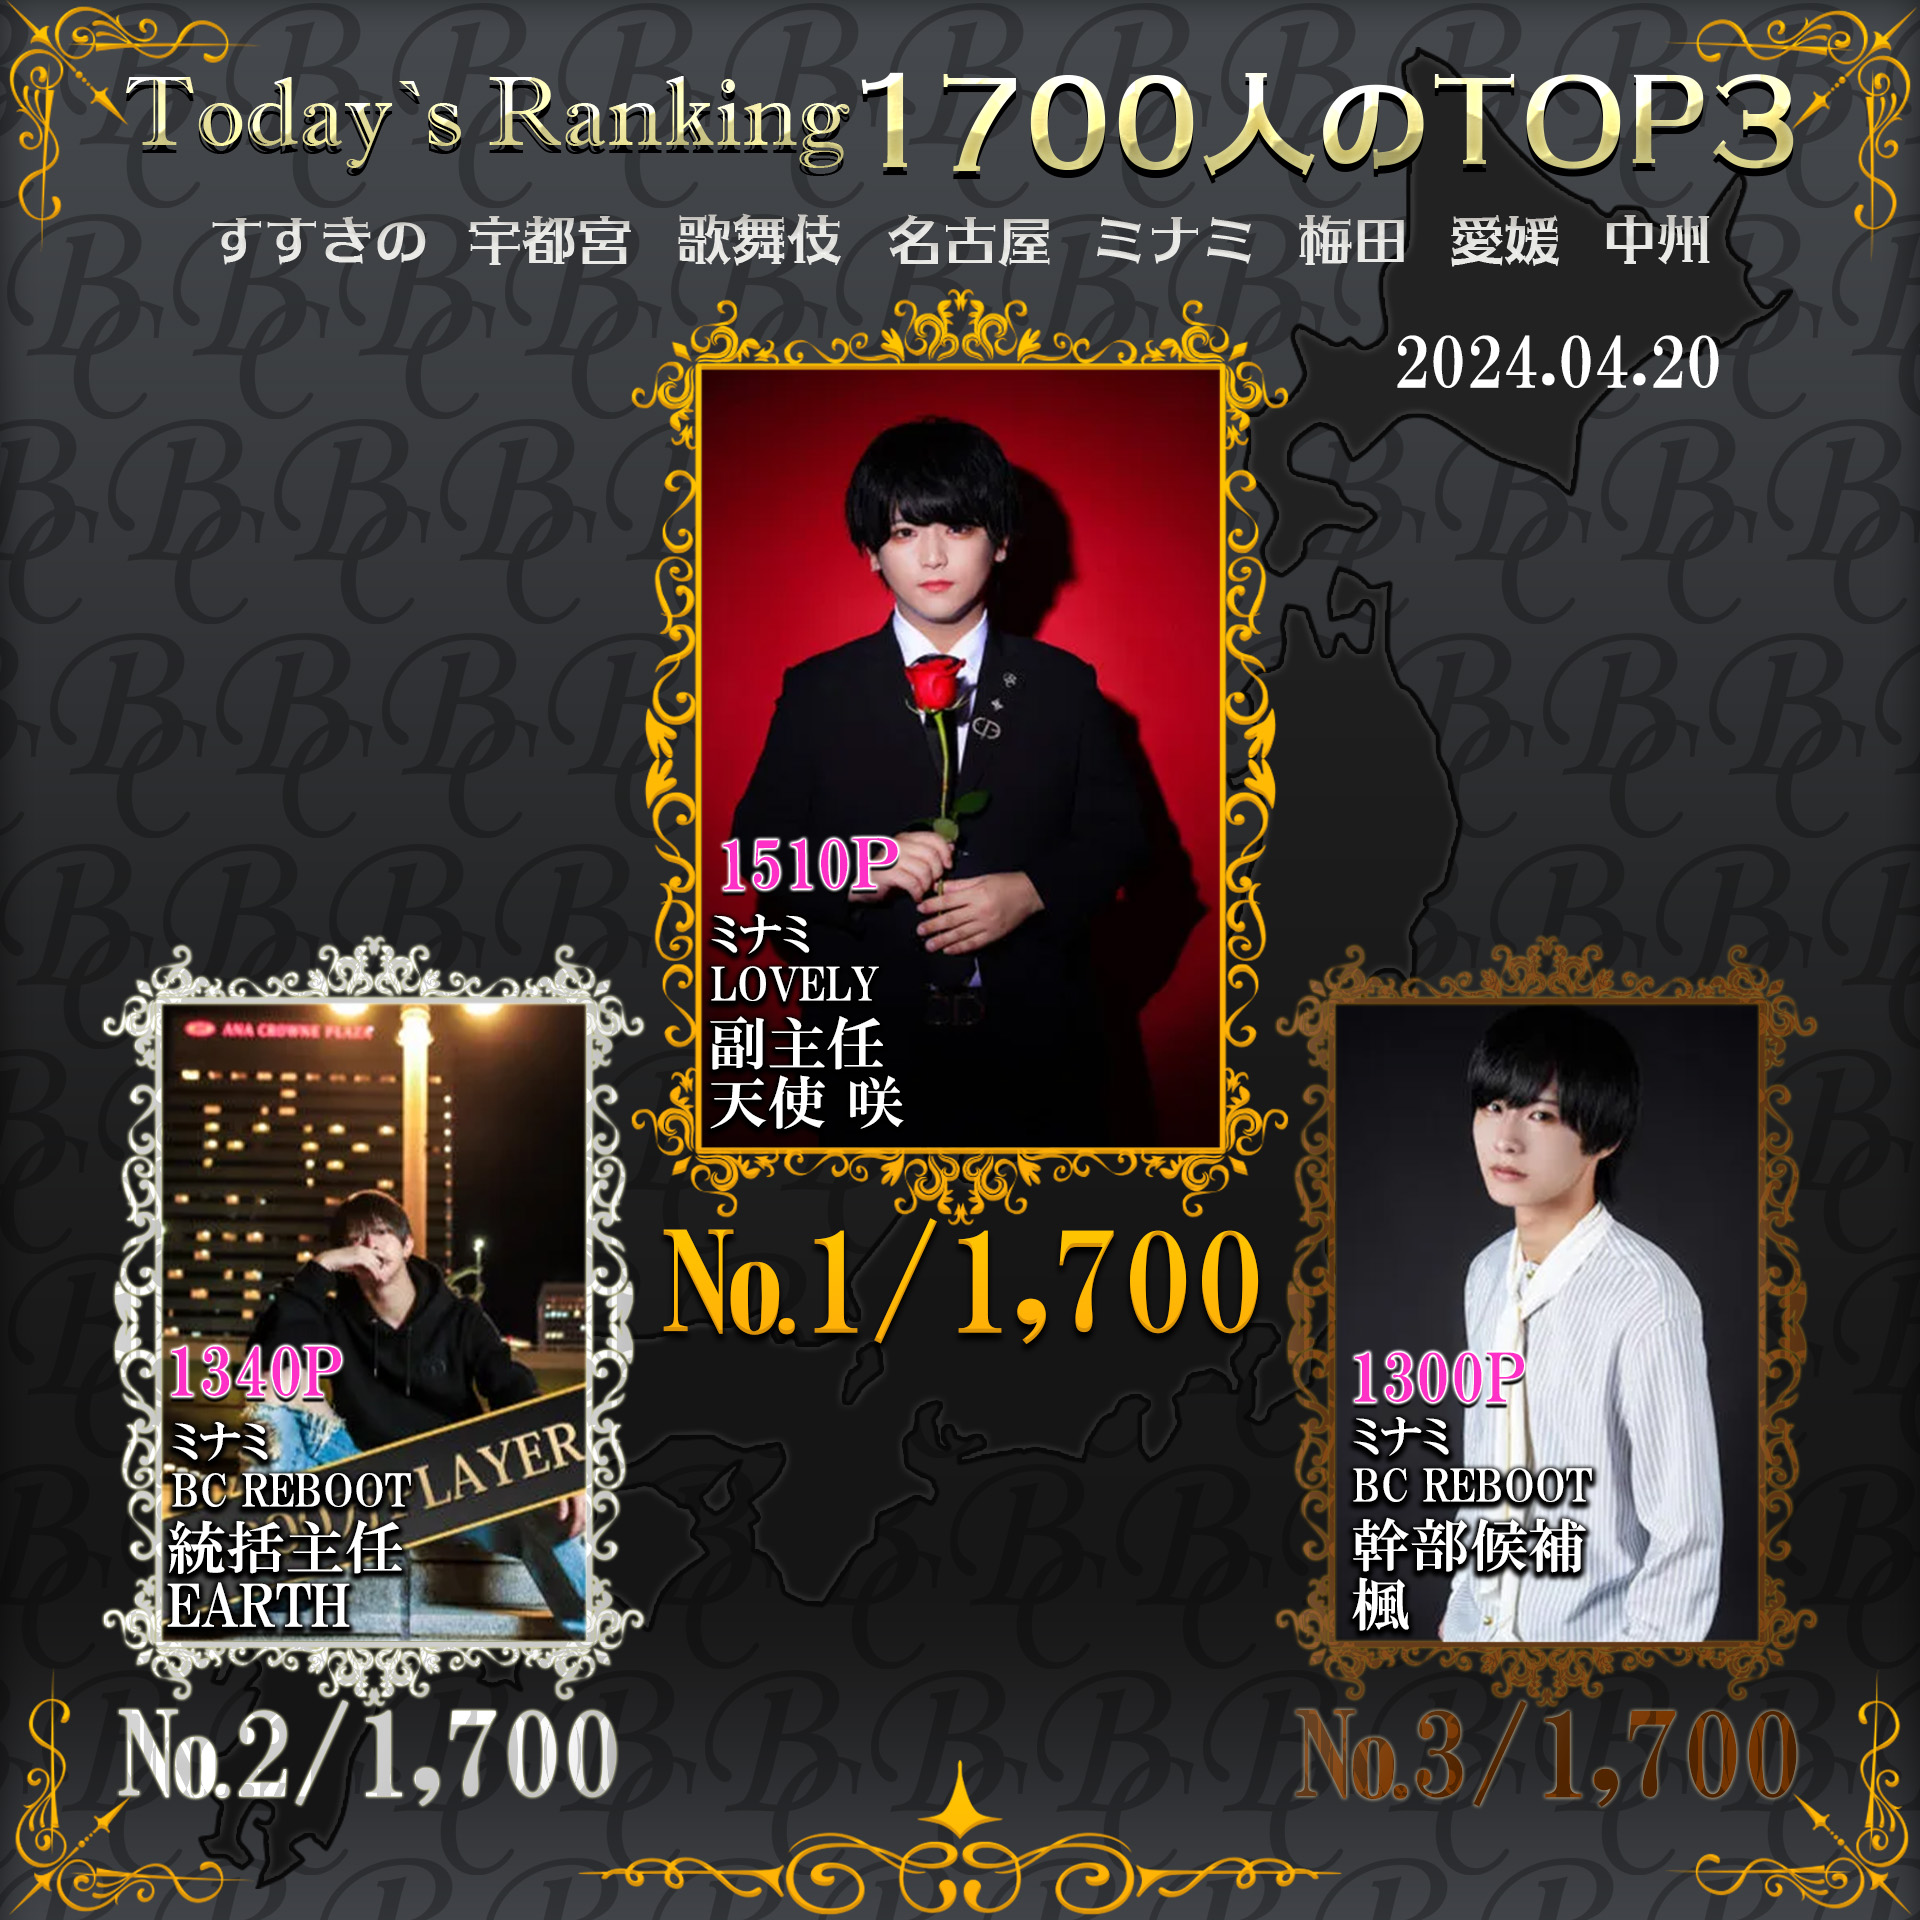 4/20 Today’s Ranking